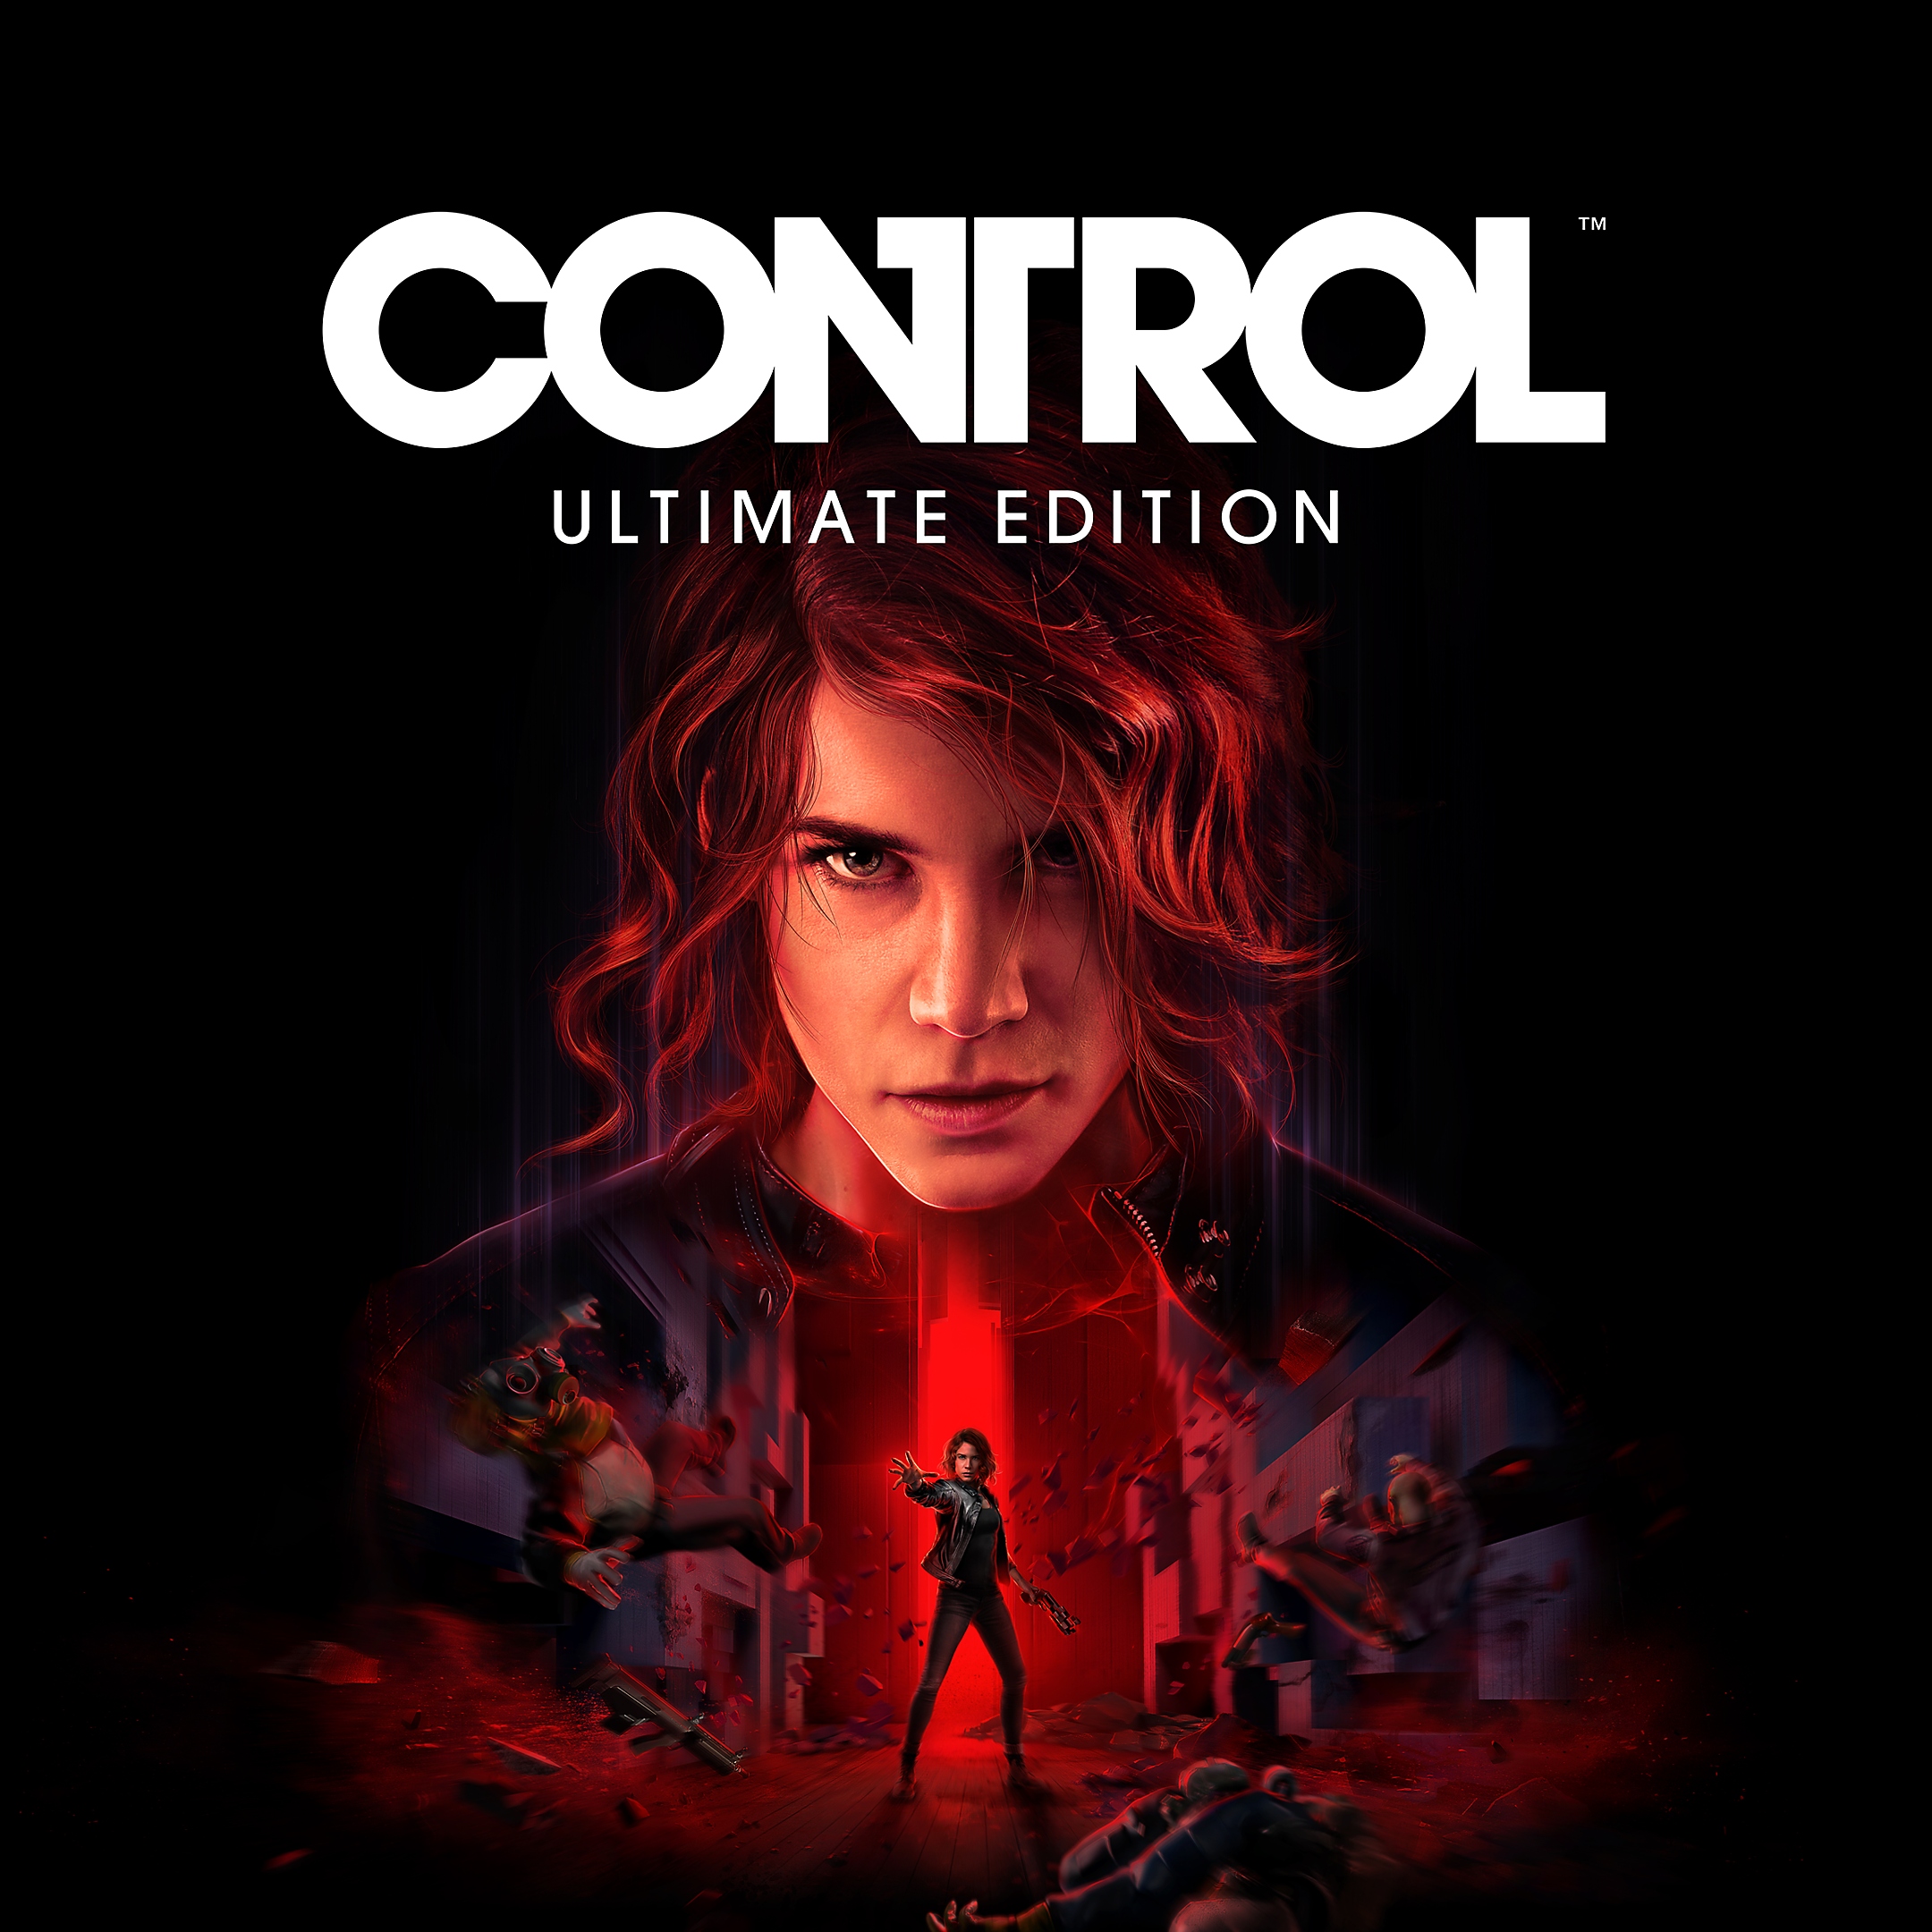 Control: Ultimate Edition – hovedillustrasjon